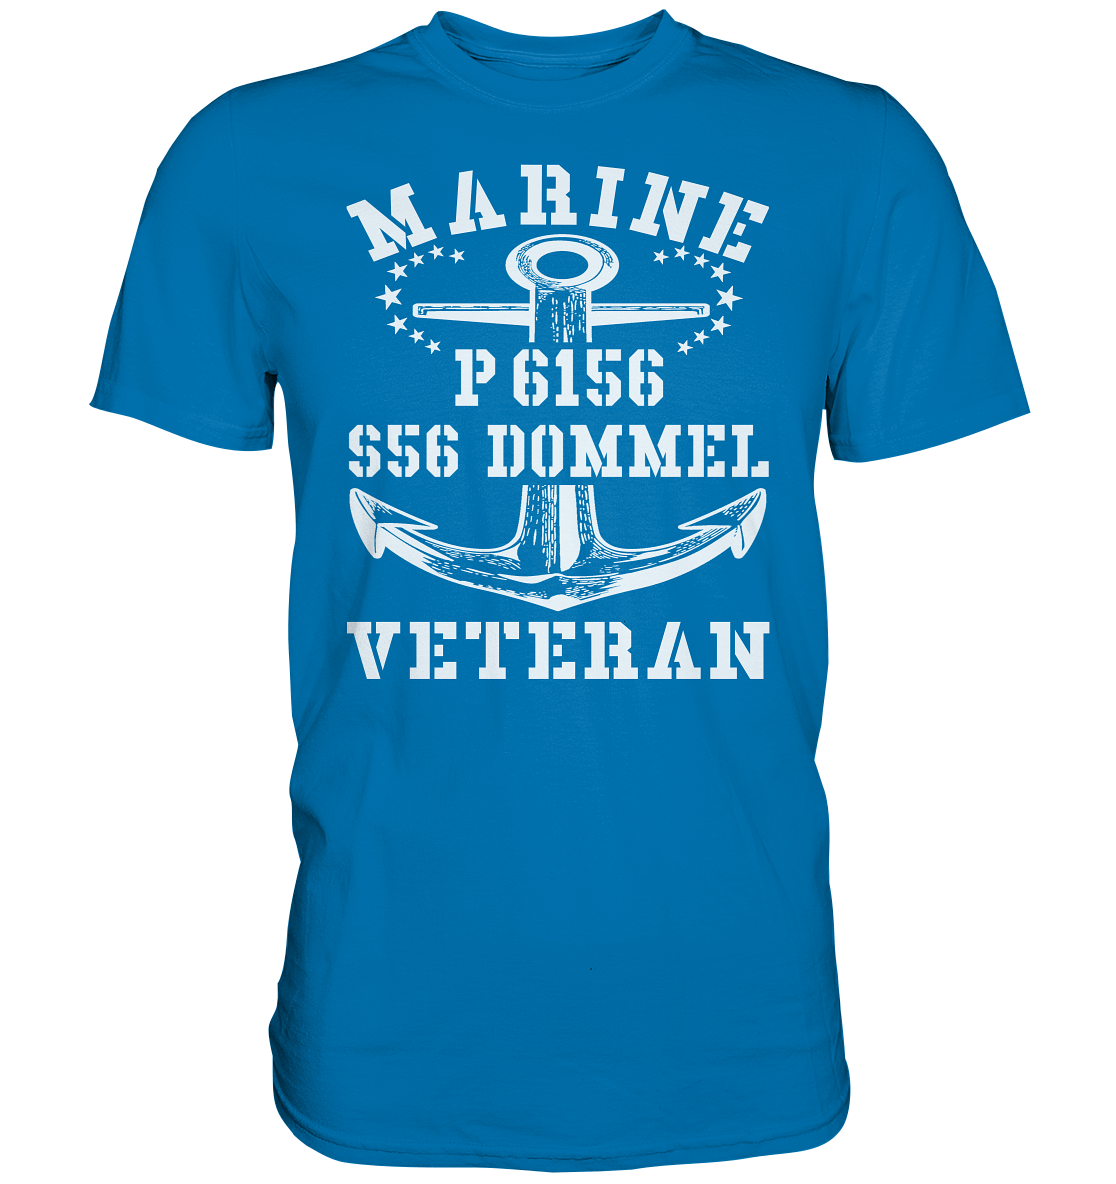 P6156 S56 DOMMEL Marine Veteran - Premium Shirt